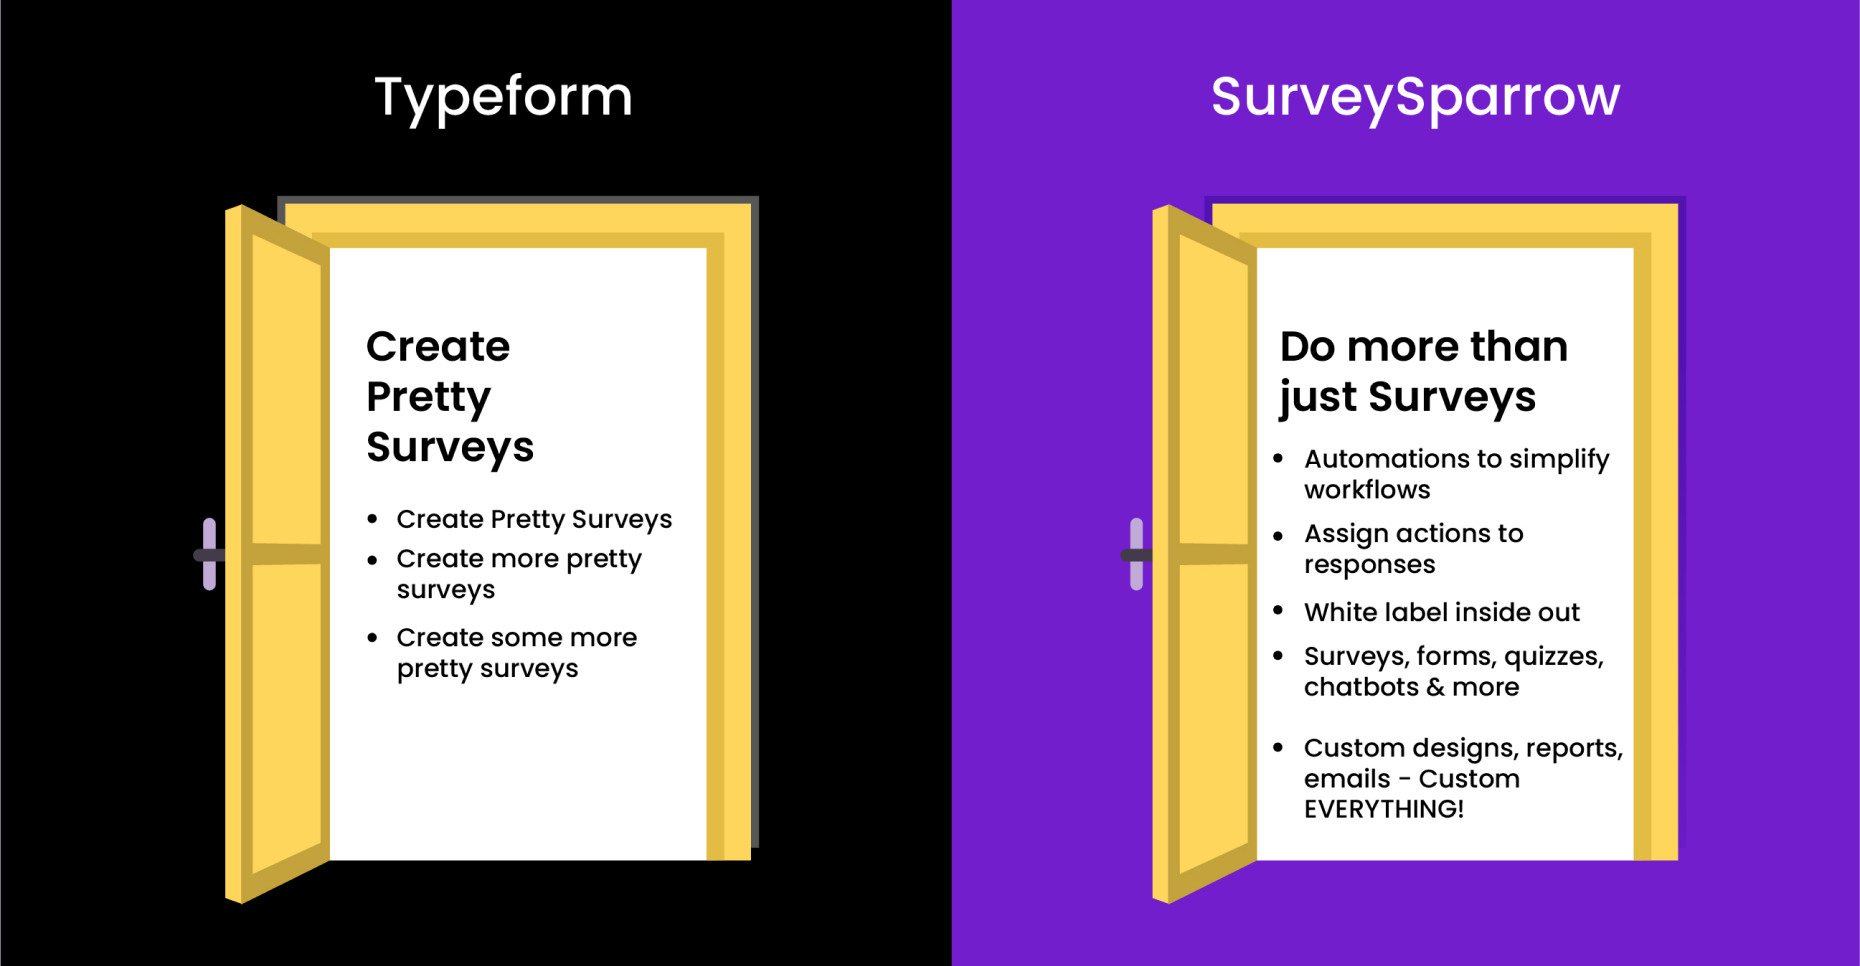 With Typeform you get to create pretty surveys, but SurveySparrow helps you do more than just surveys.